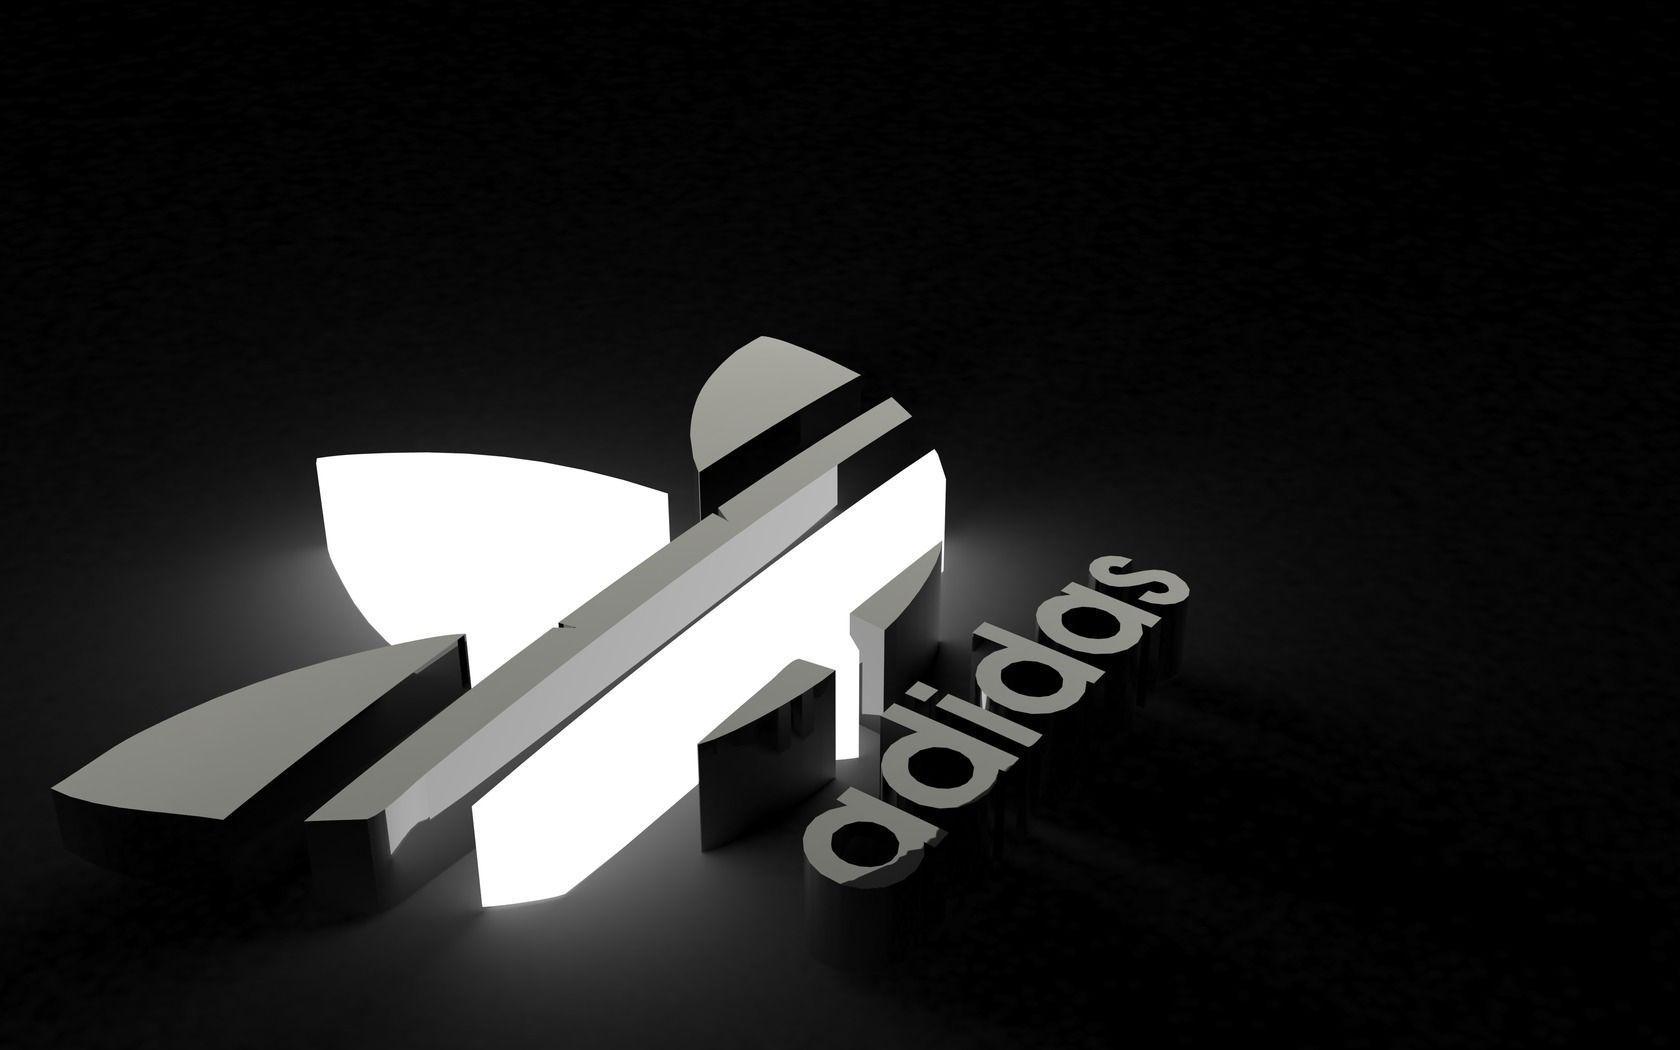 Adidas Logo New Original HD Wallpaper for iPhone is a fantastic